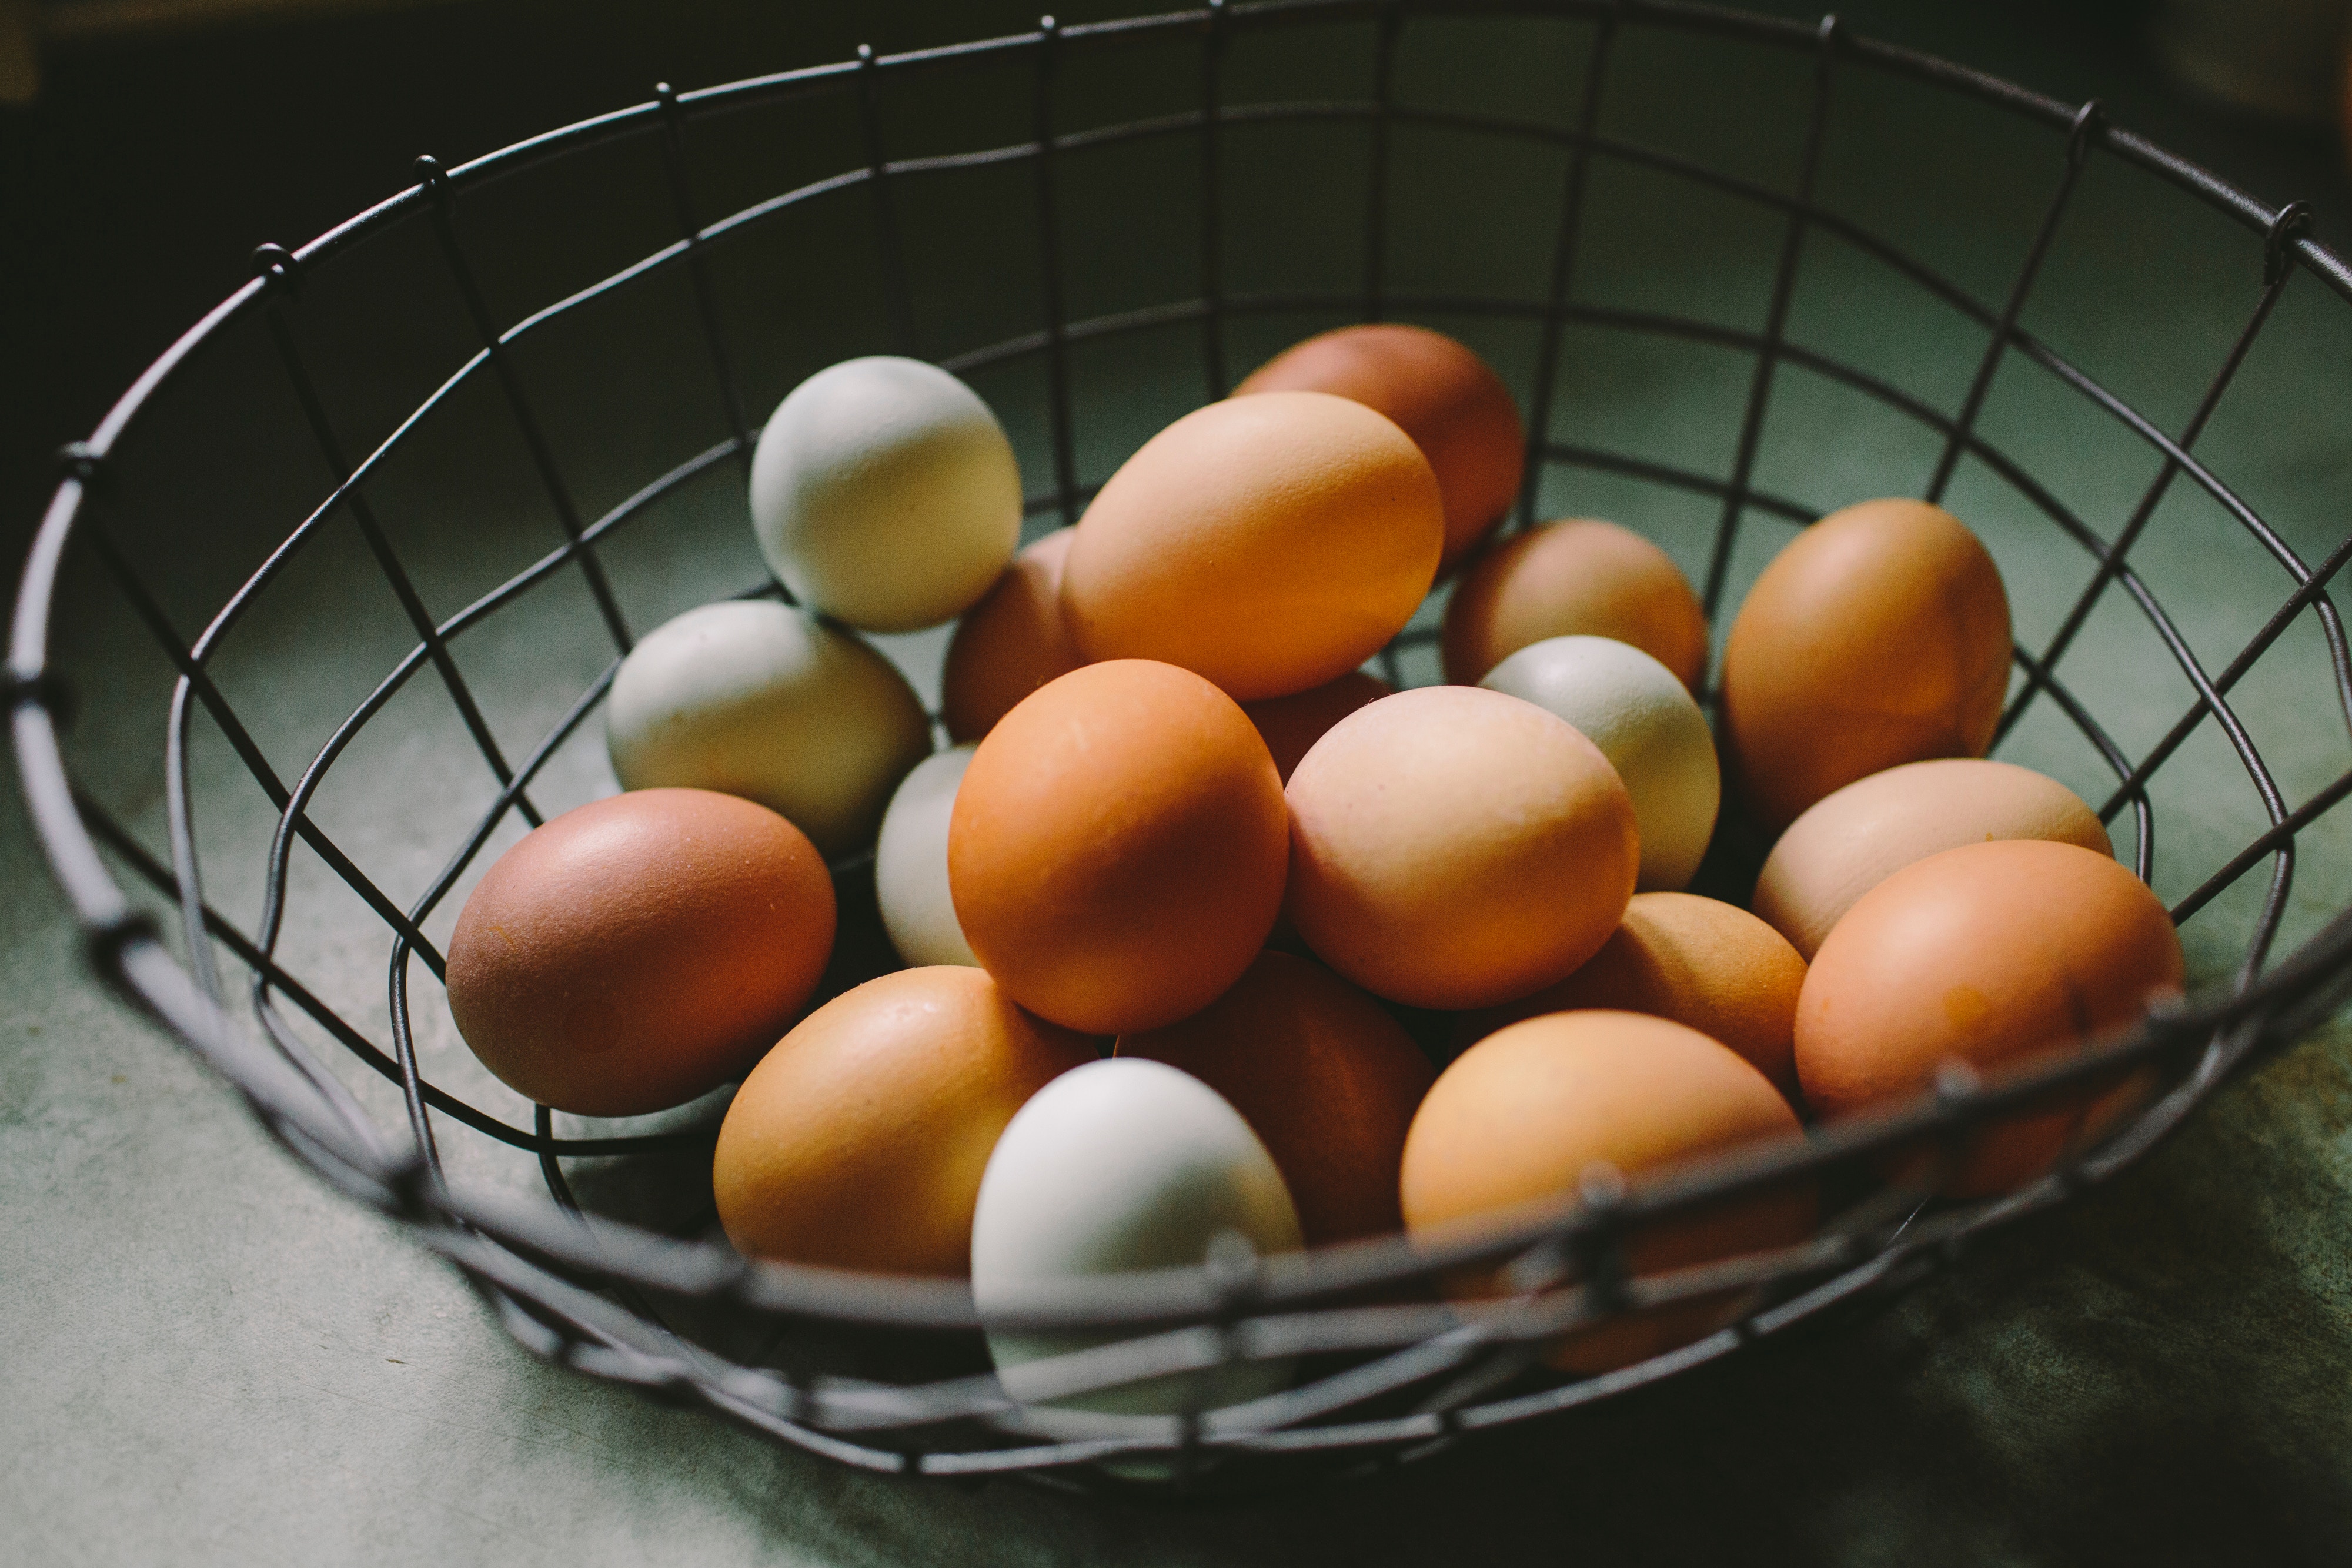 free range eggs impact investing